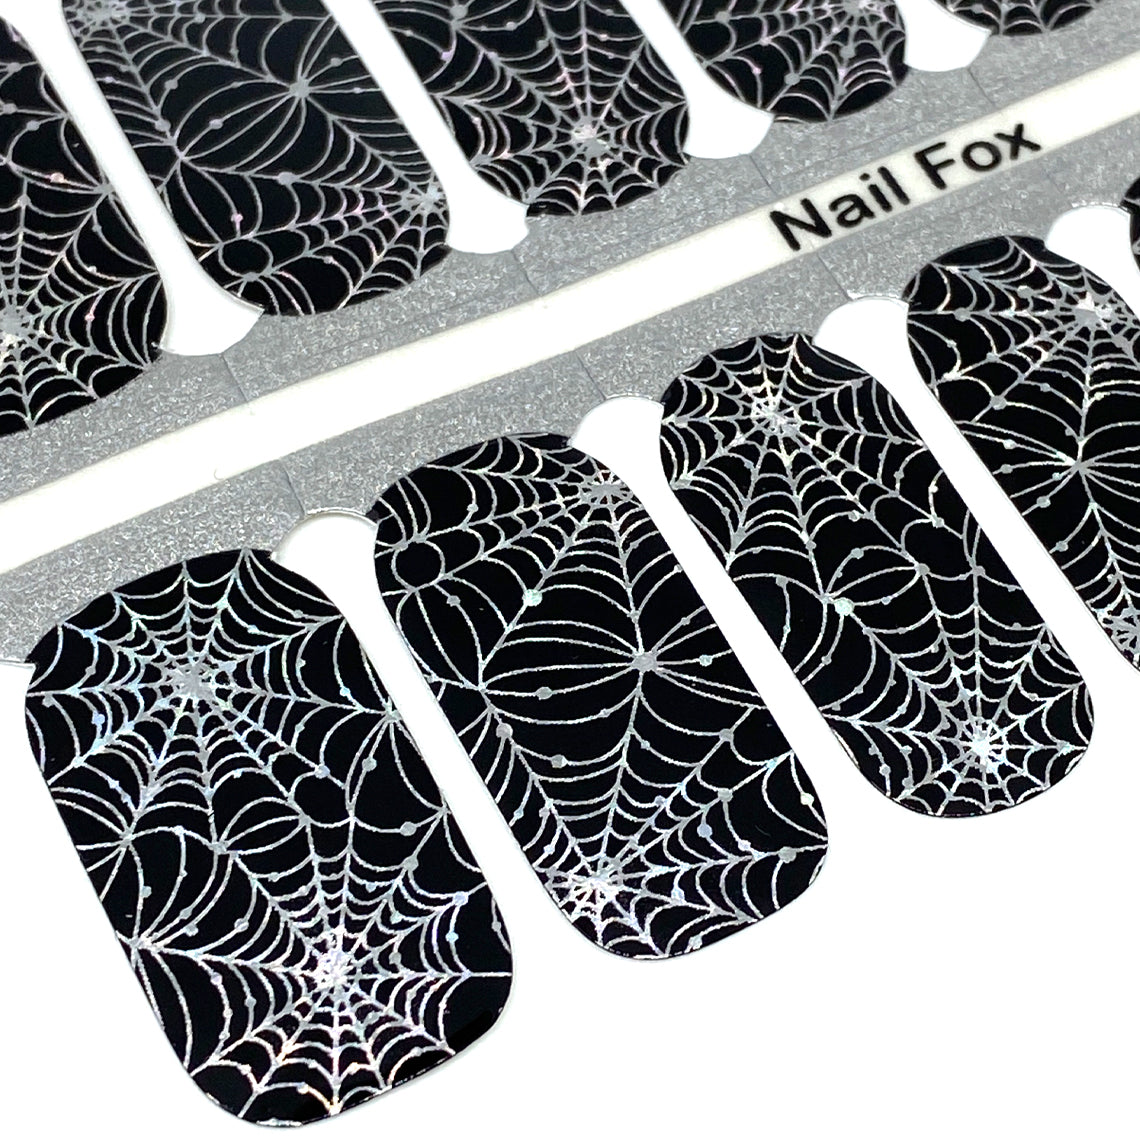 Cosmic Web Exclusive Design Nail Wraps (HOLO)